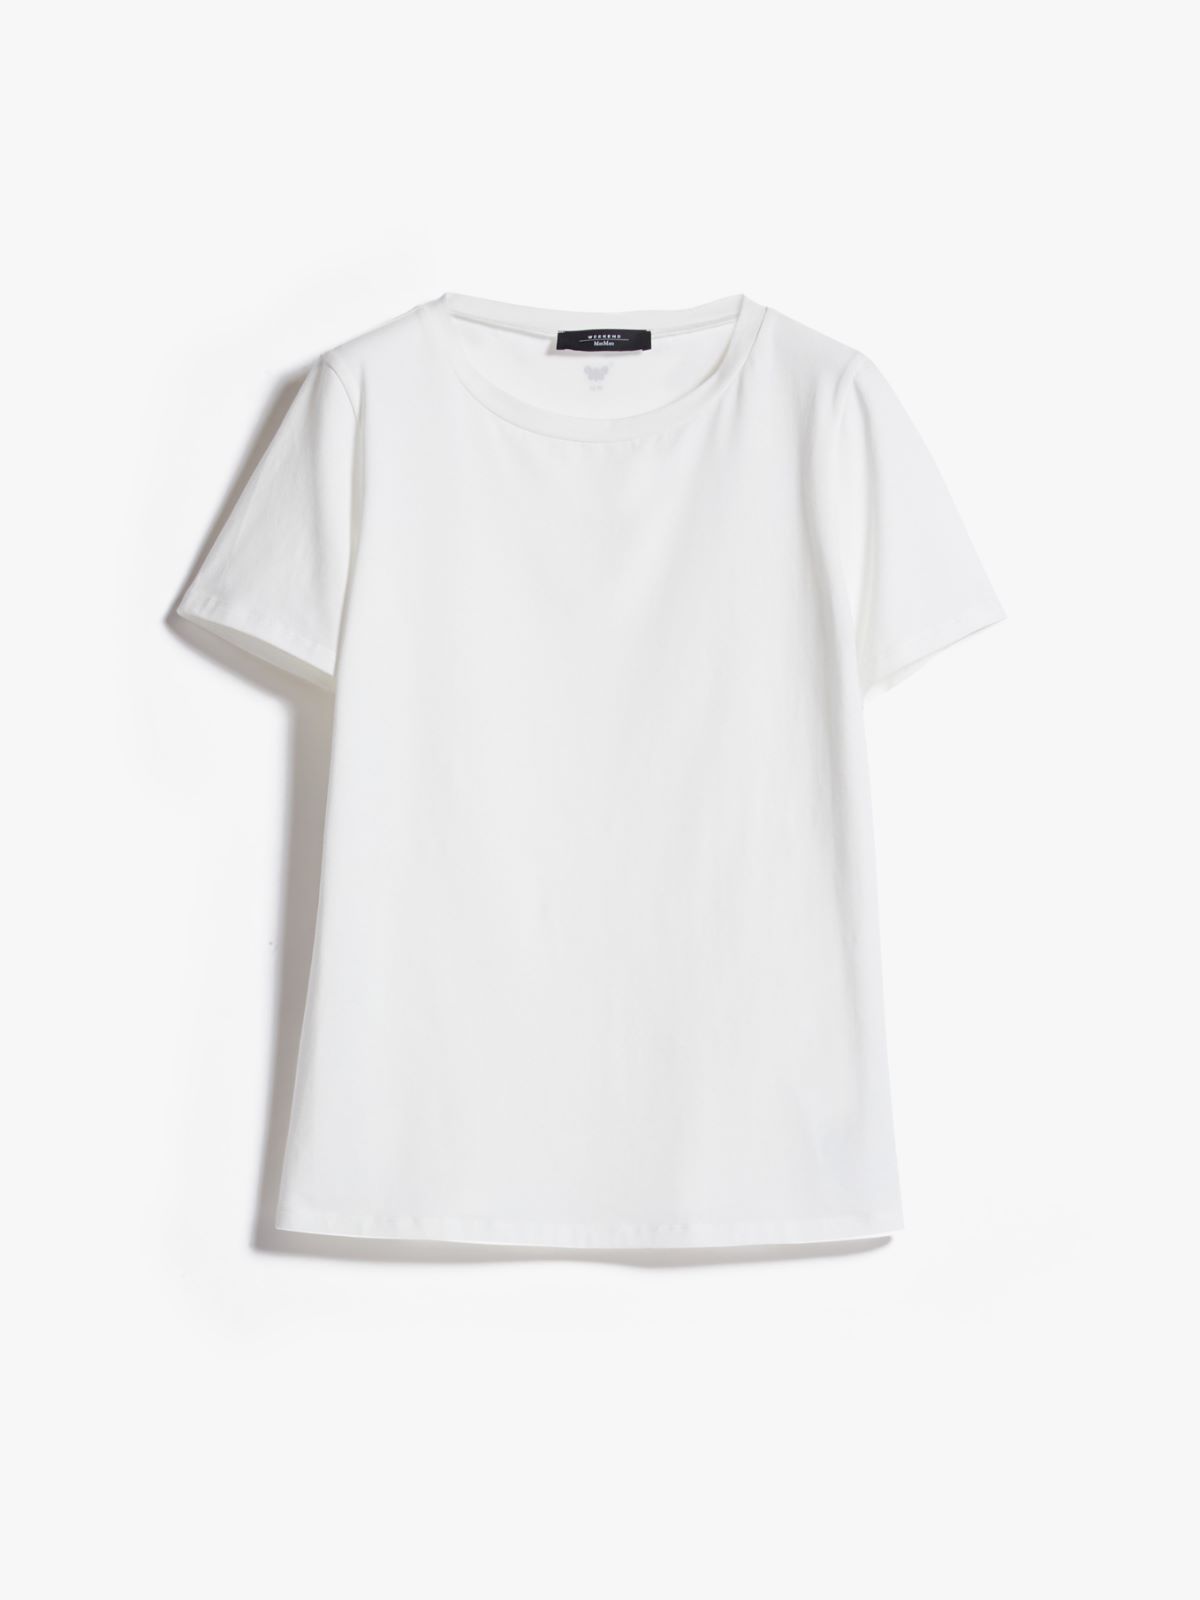 Jersey T-shirt - WHITE - Weekend Max Mara - 6